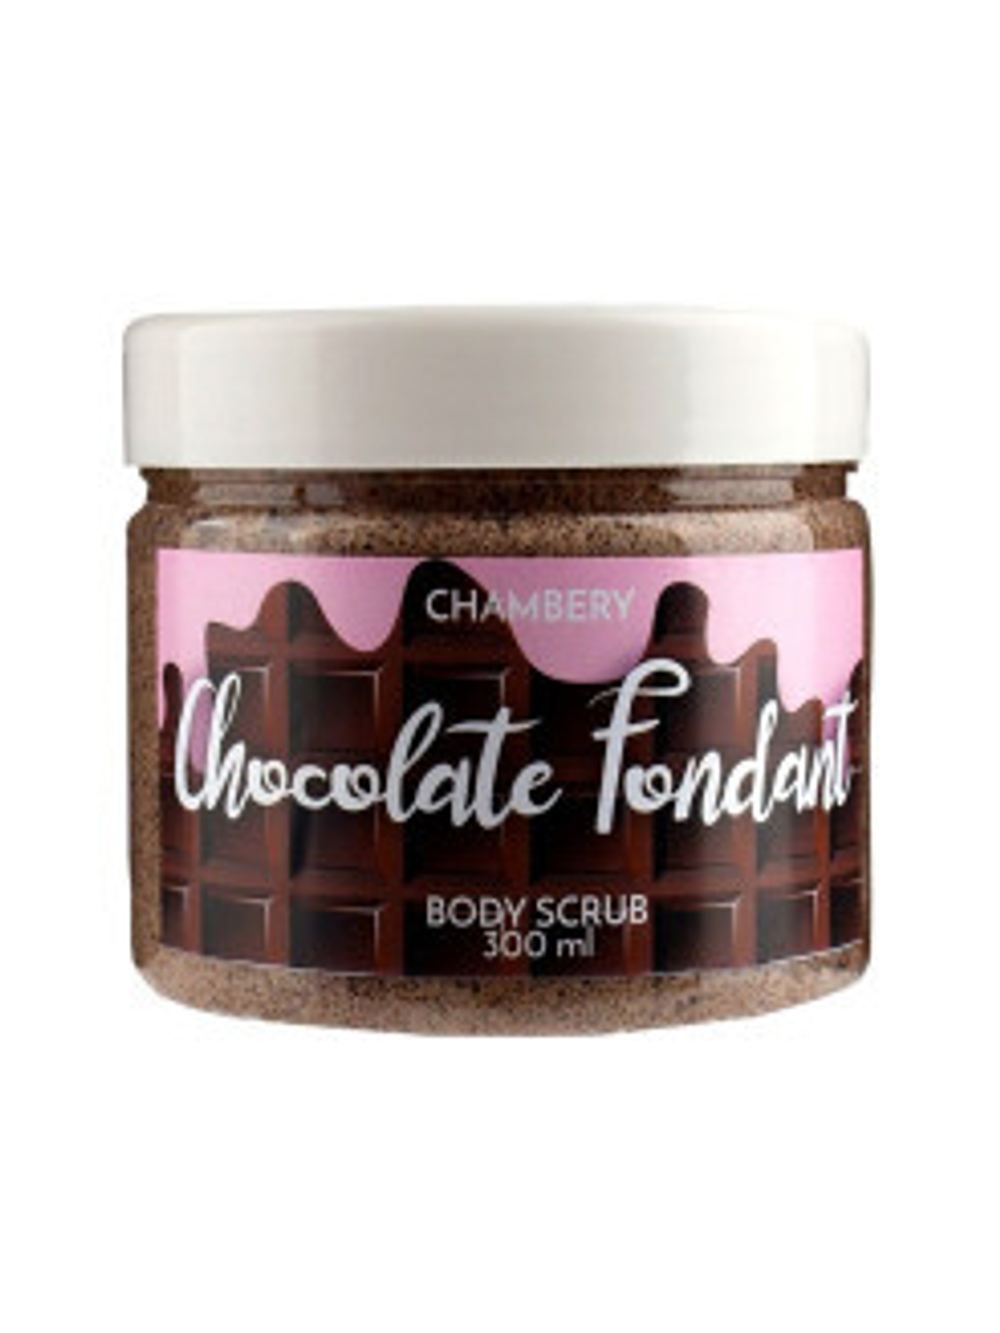 Скраб для тела CHAMBERY Chocolate Fondant с ароматом "Шоколадный фондан" 300мл.